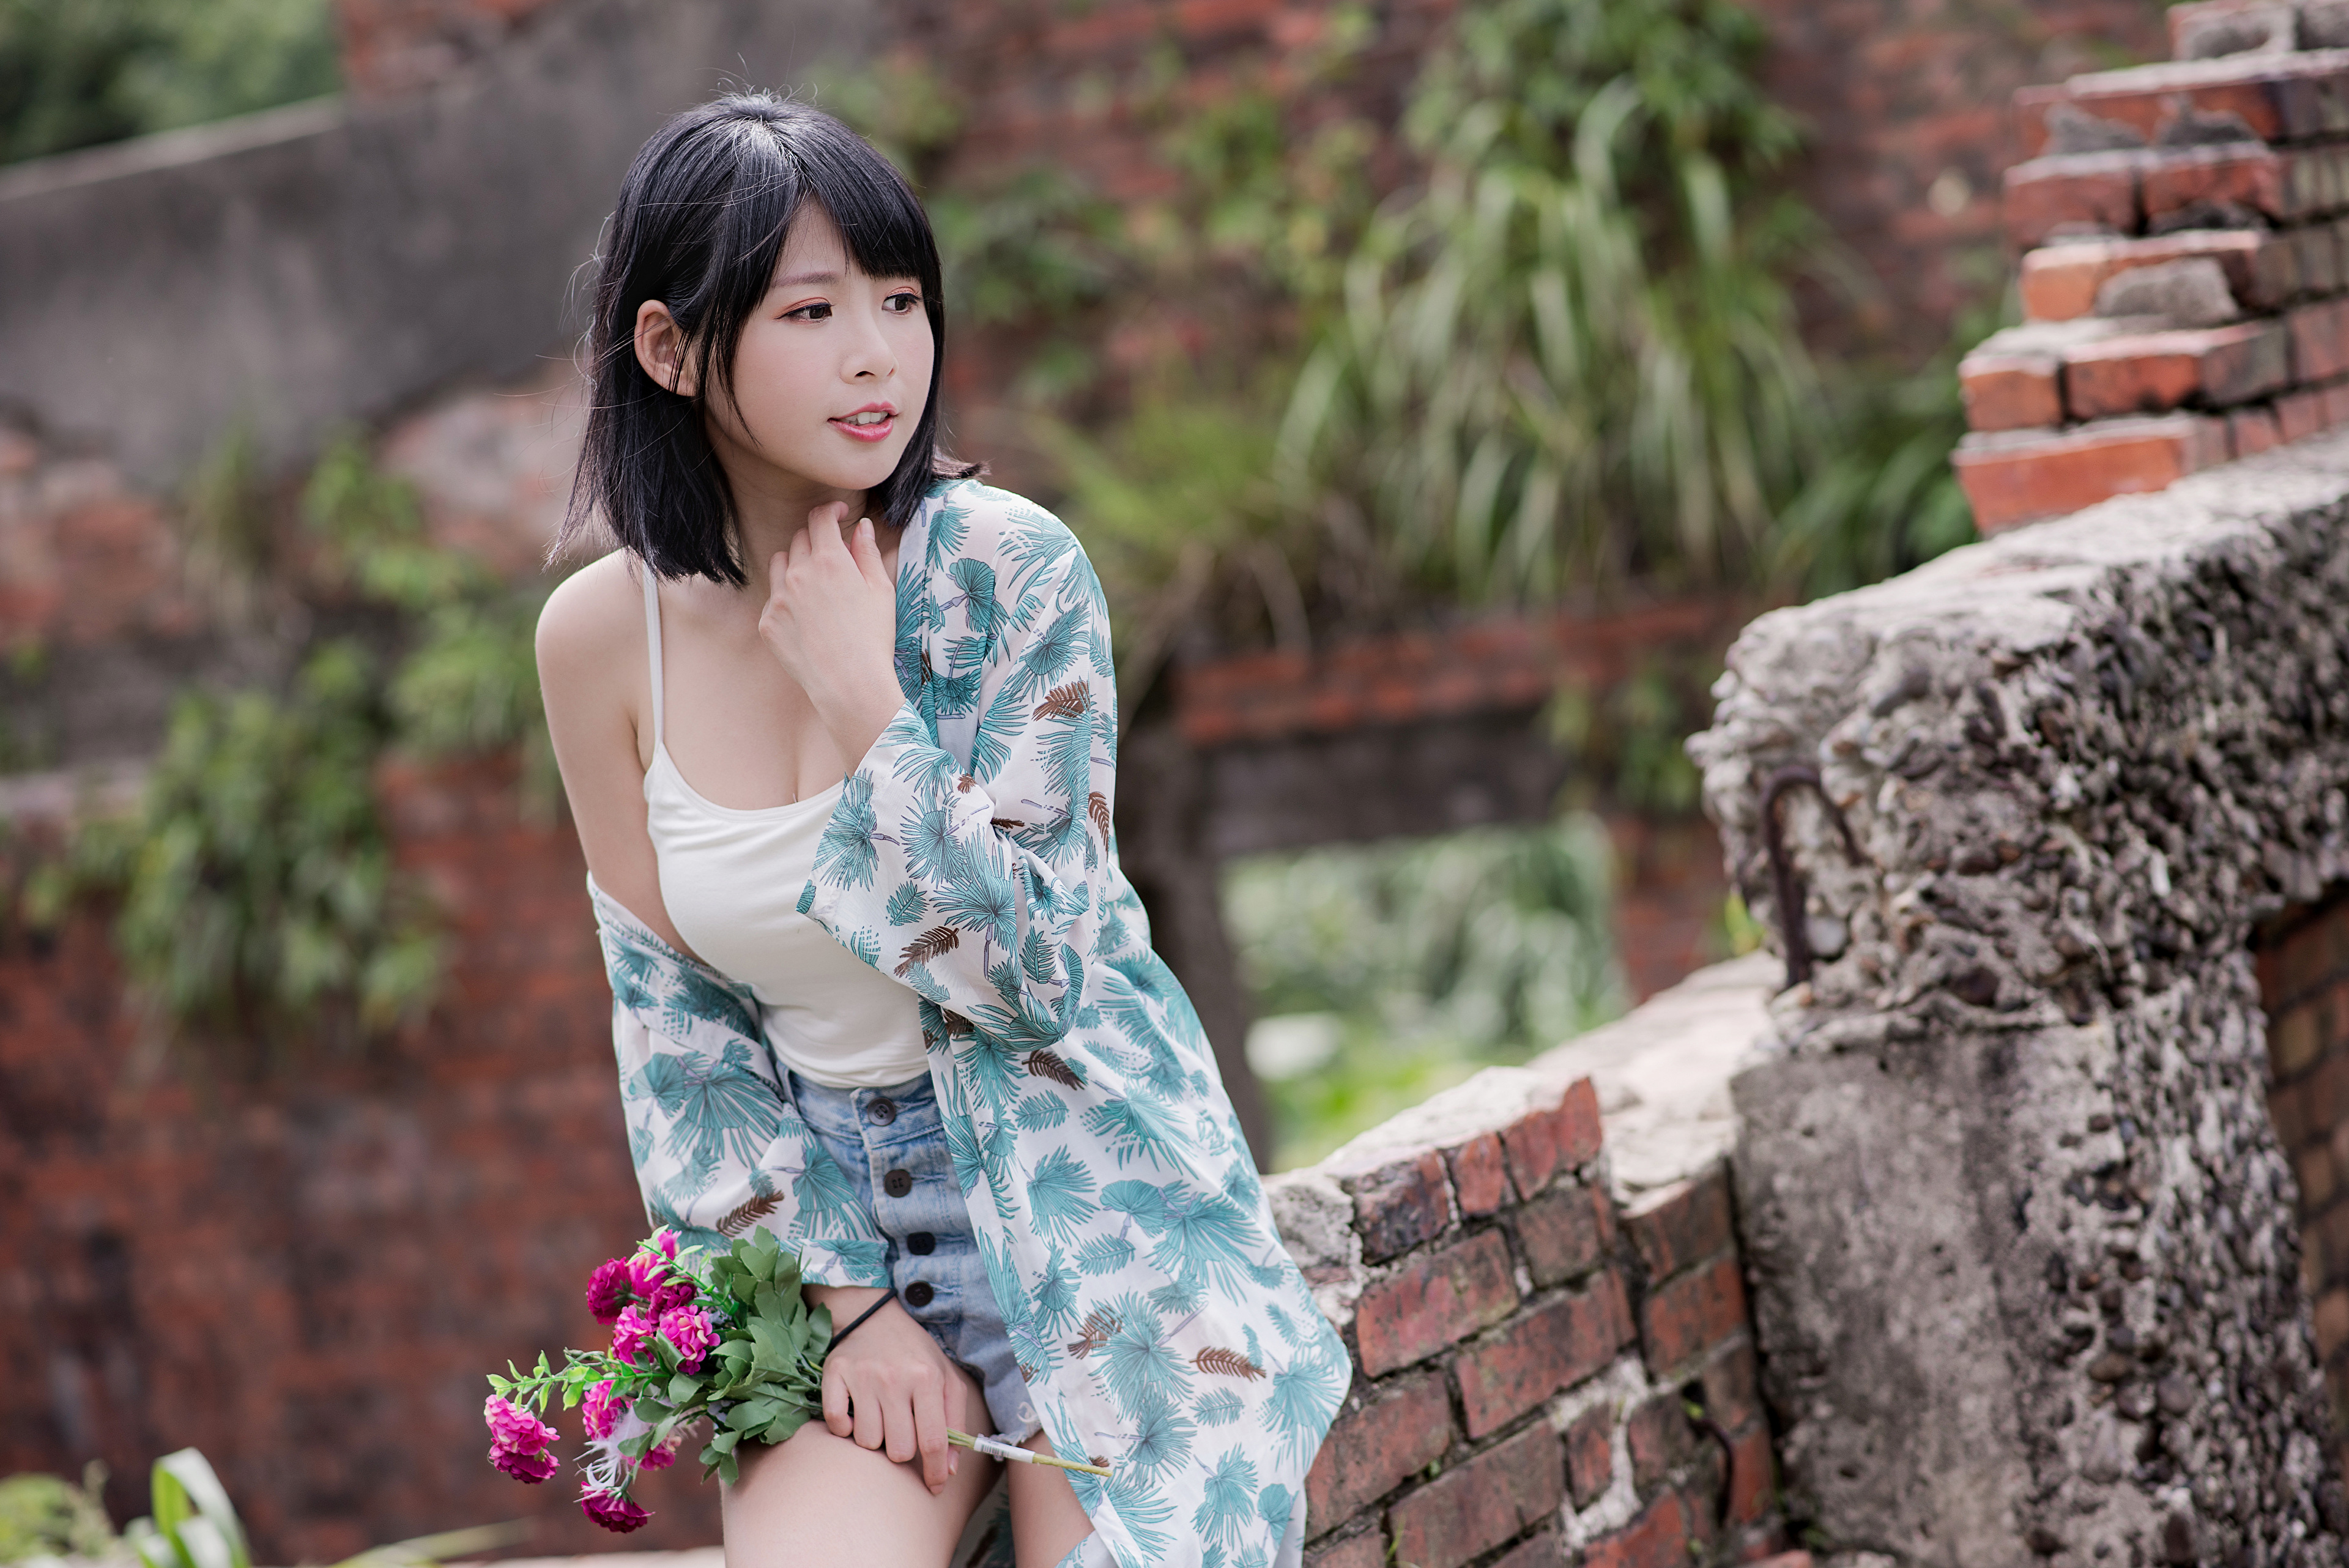 Asian Model Women Dark Hair Short Hair Shorts White Shirt Blouse Flowers Bricks Wall Depth Of Field  3840x2563